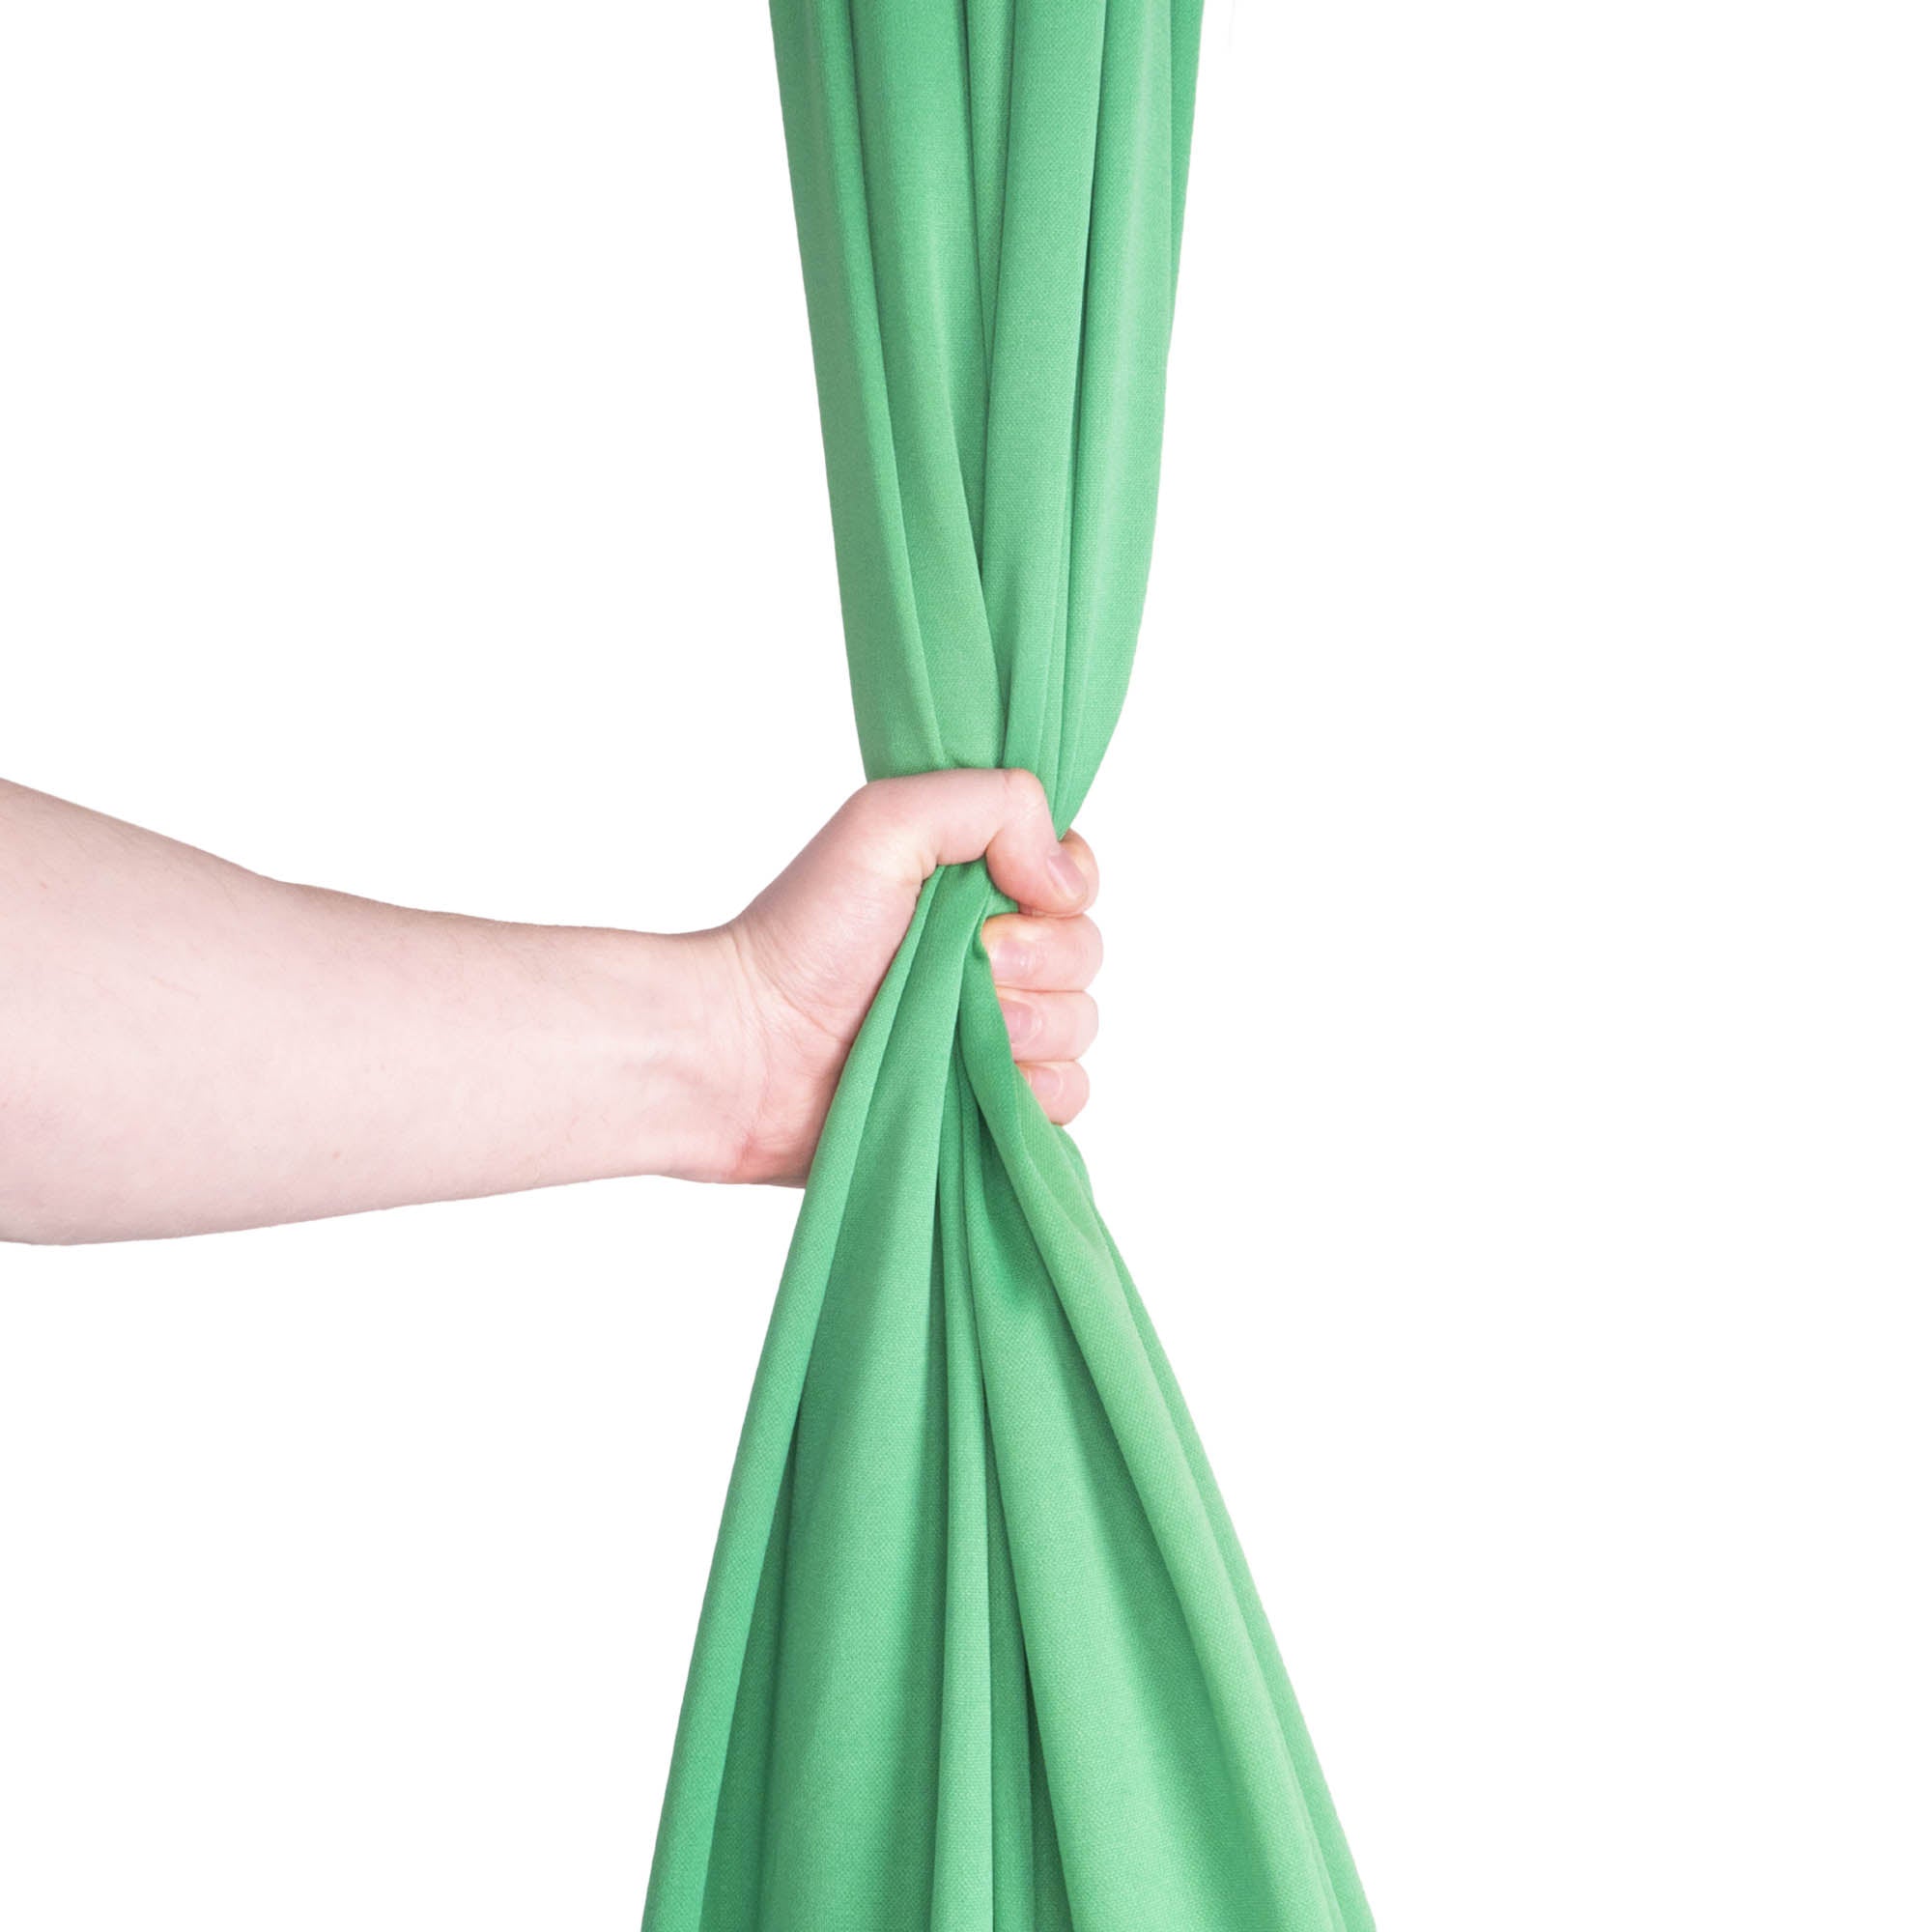 Firetoys youth aerial silk kelly green in hand